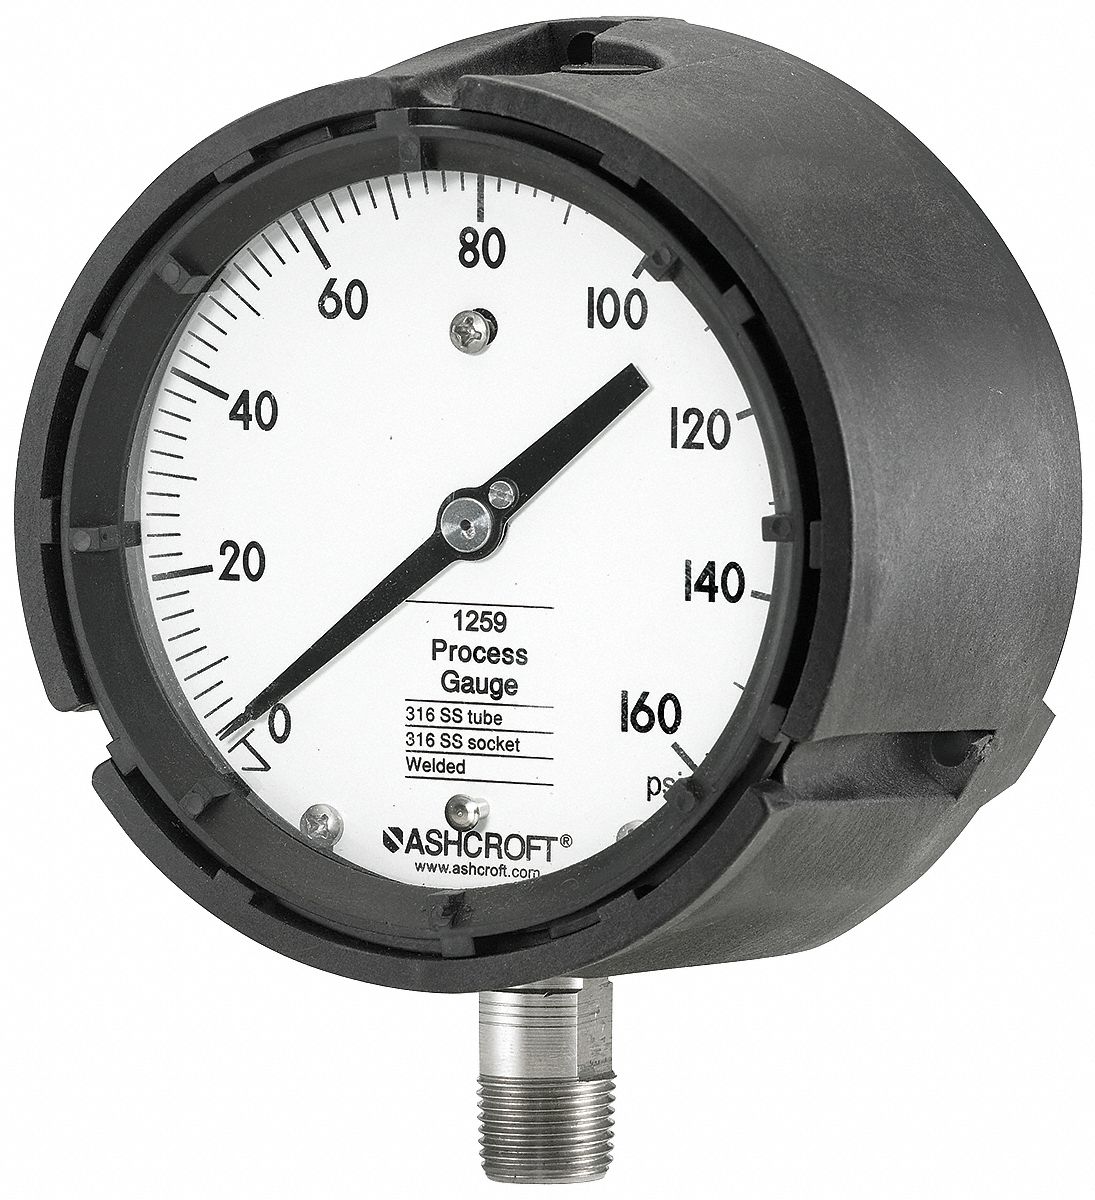 Ashcroft USA MADE 160 psi industrial gauge Air Compressor Regulator Gas 